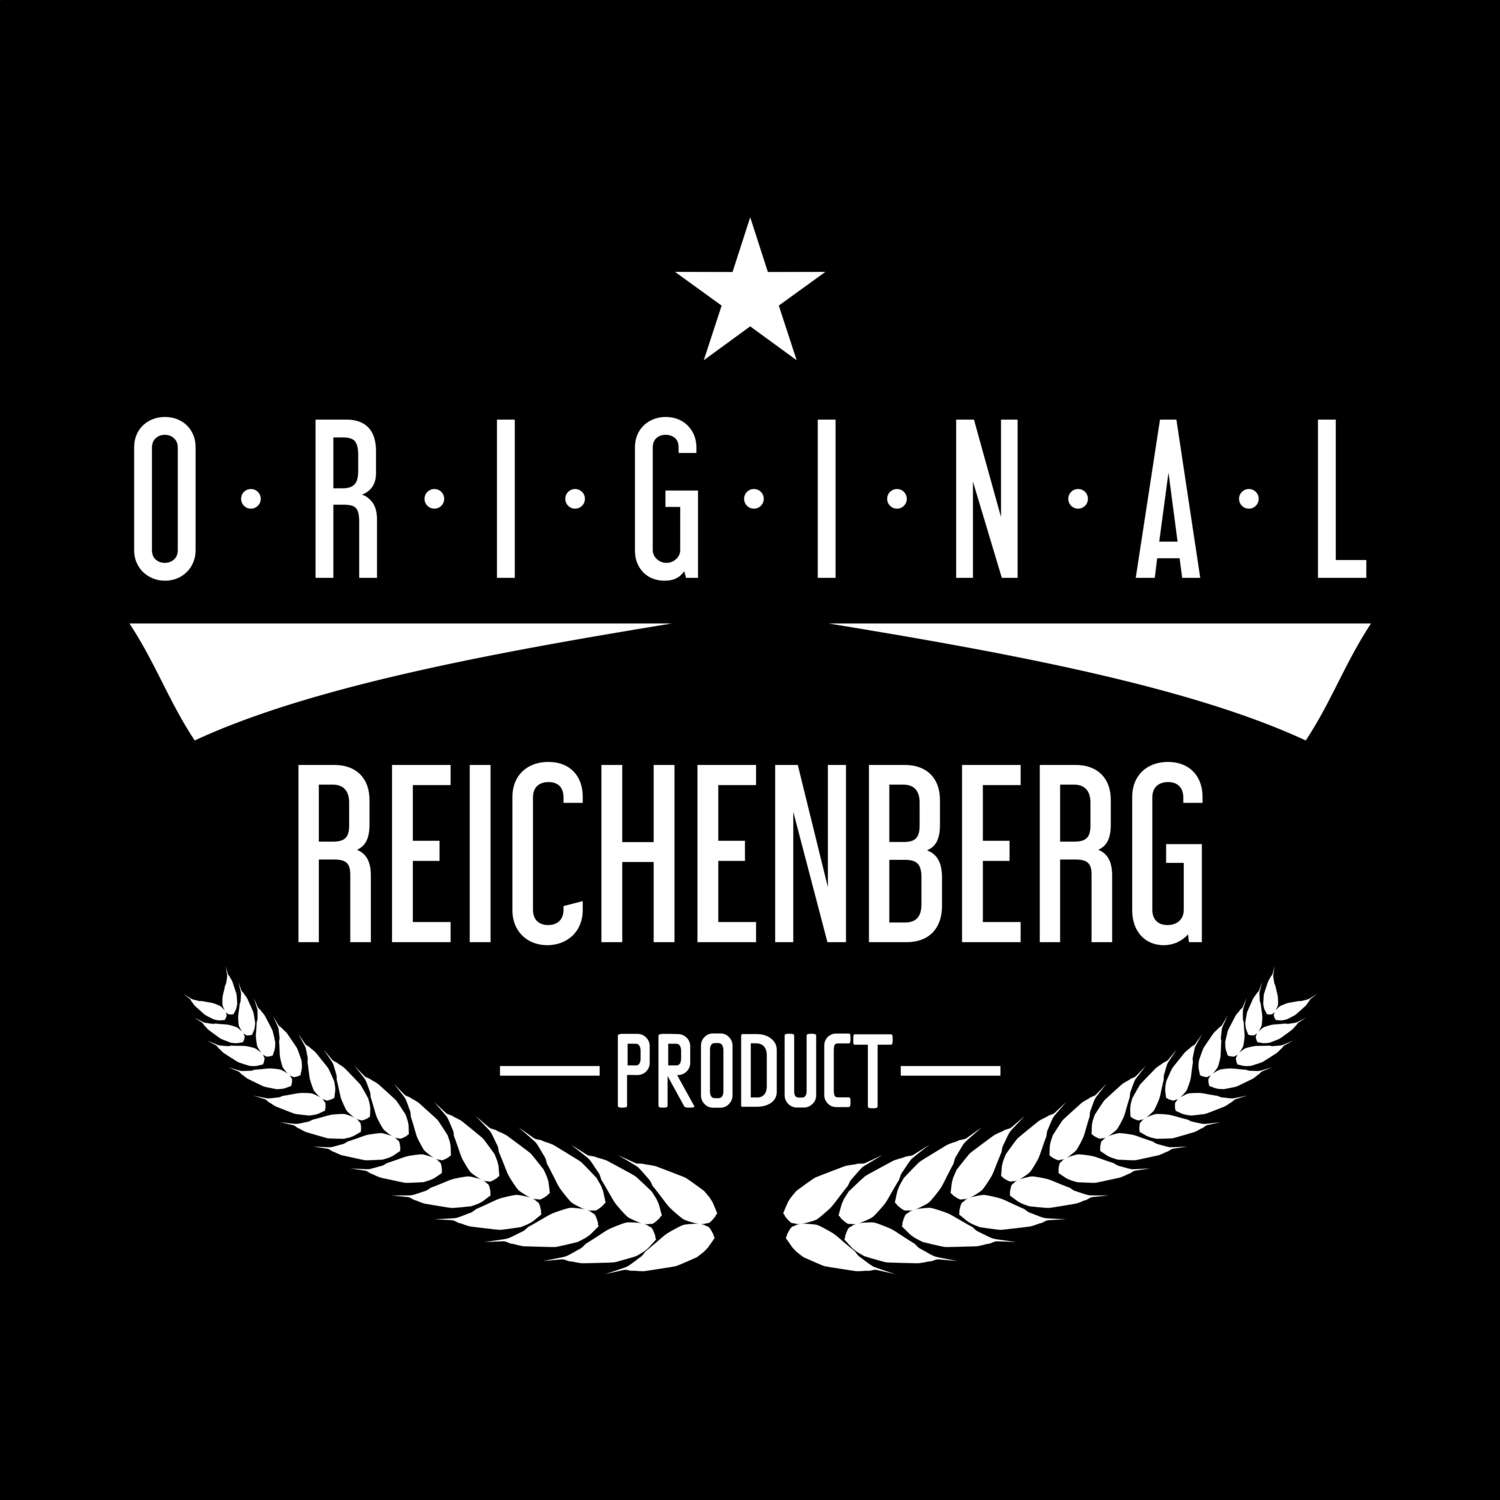 Reichenberg T-Shirt »Original Product«